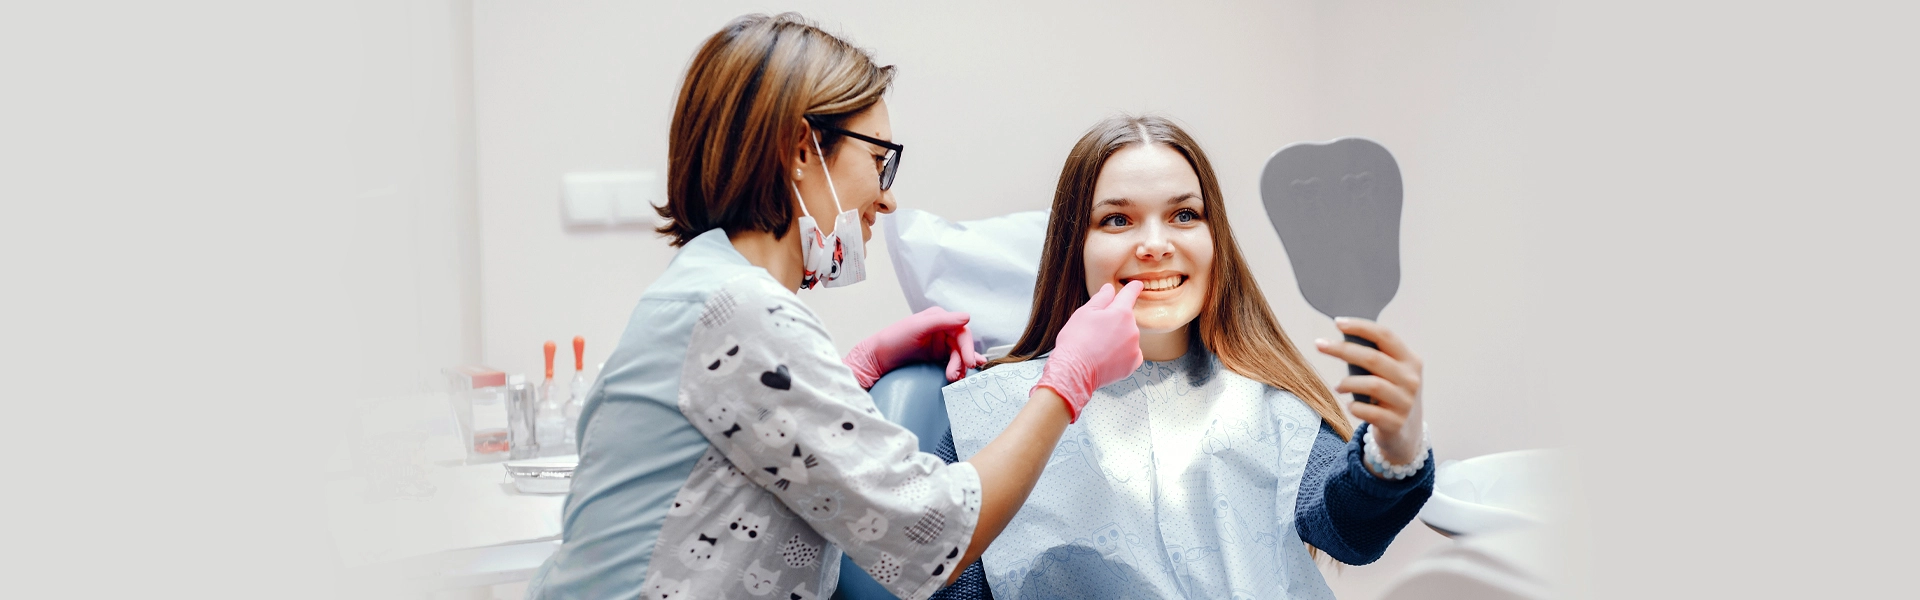 Dental Exams & Cleanings in Dundas, Hamilton